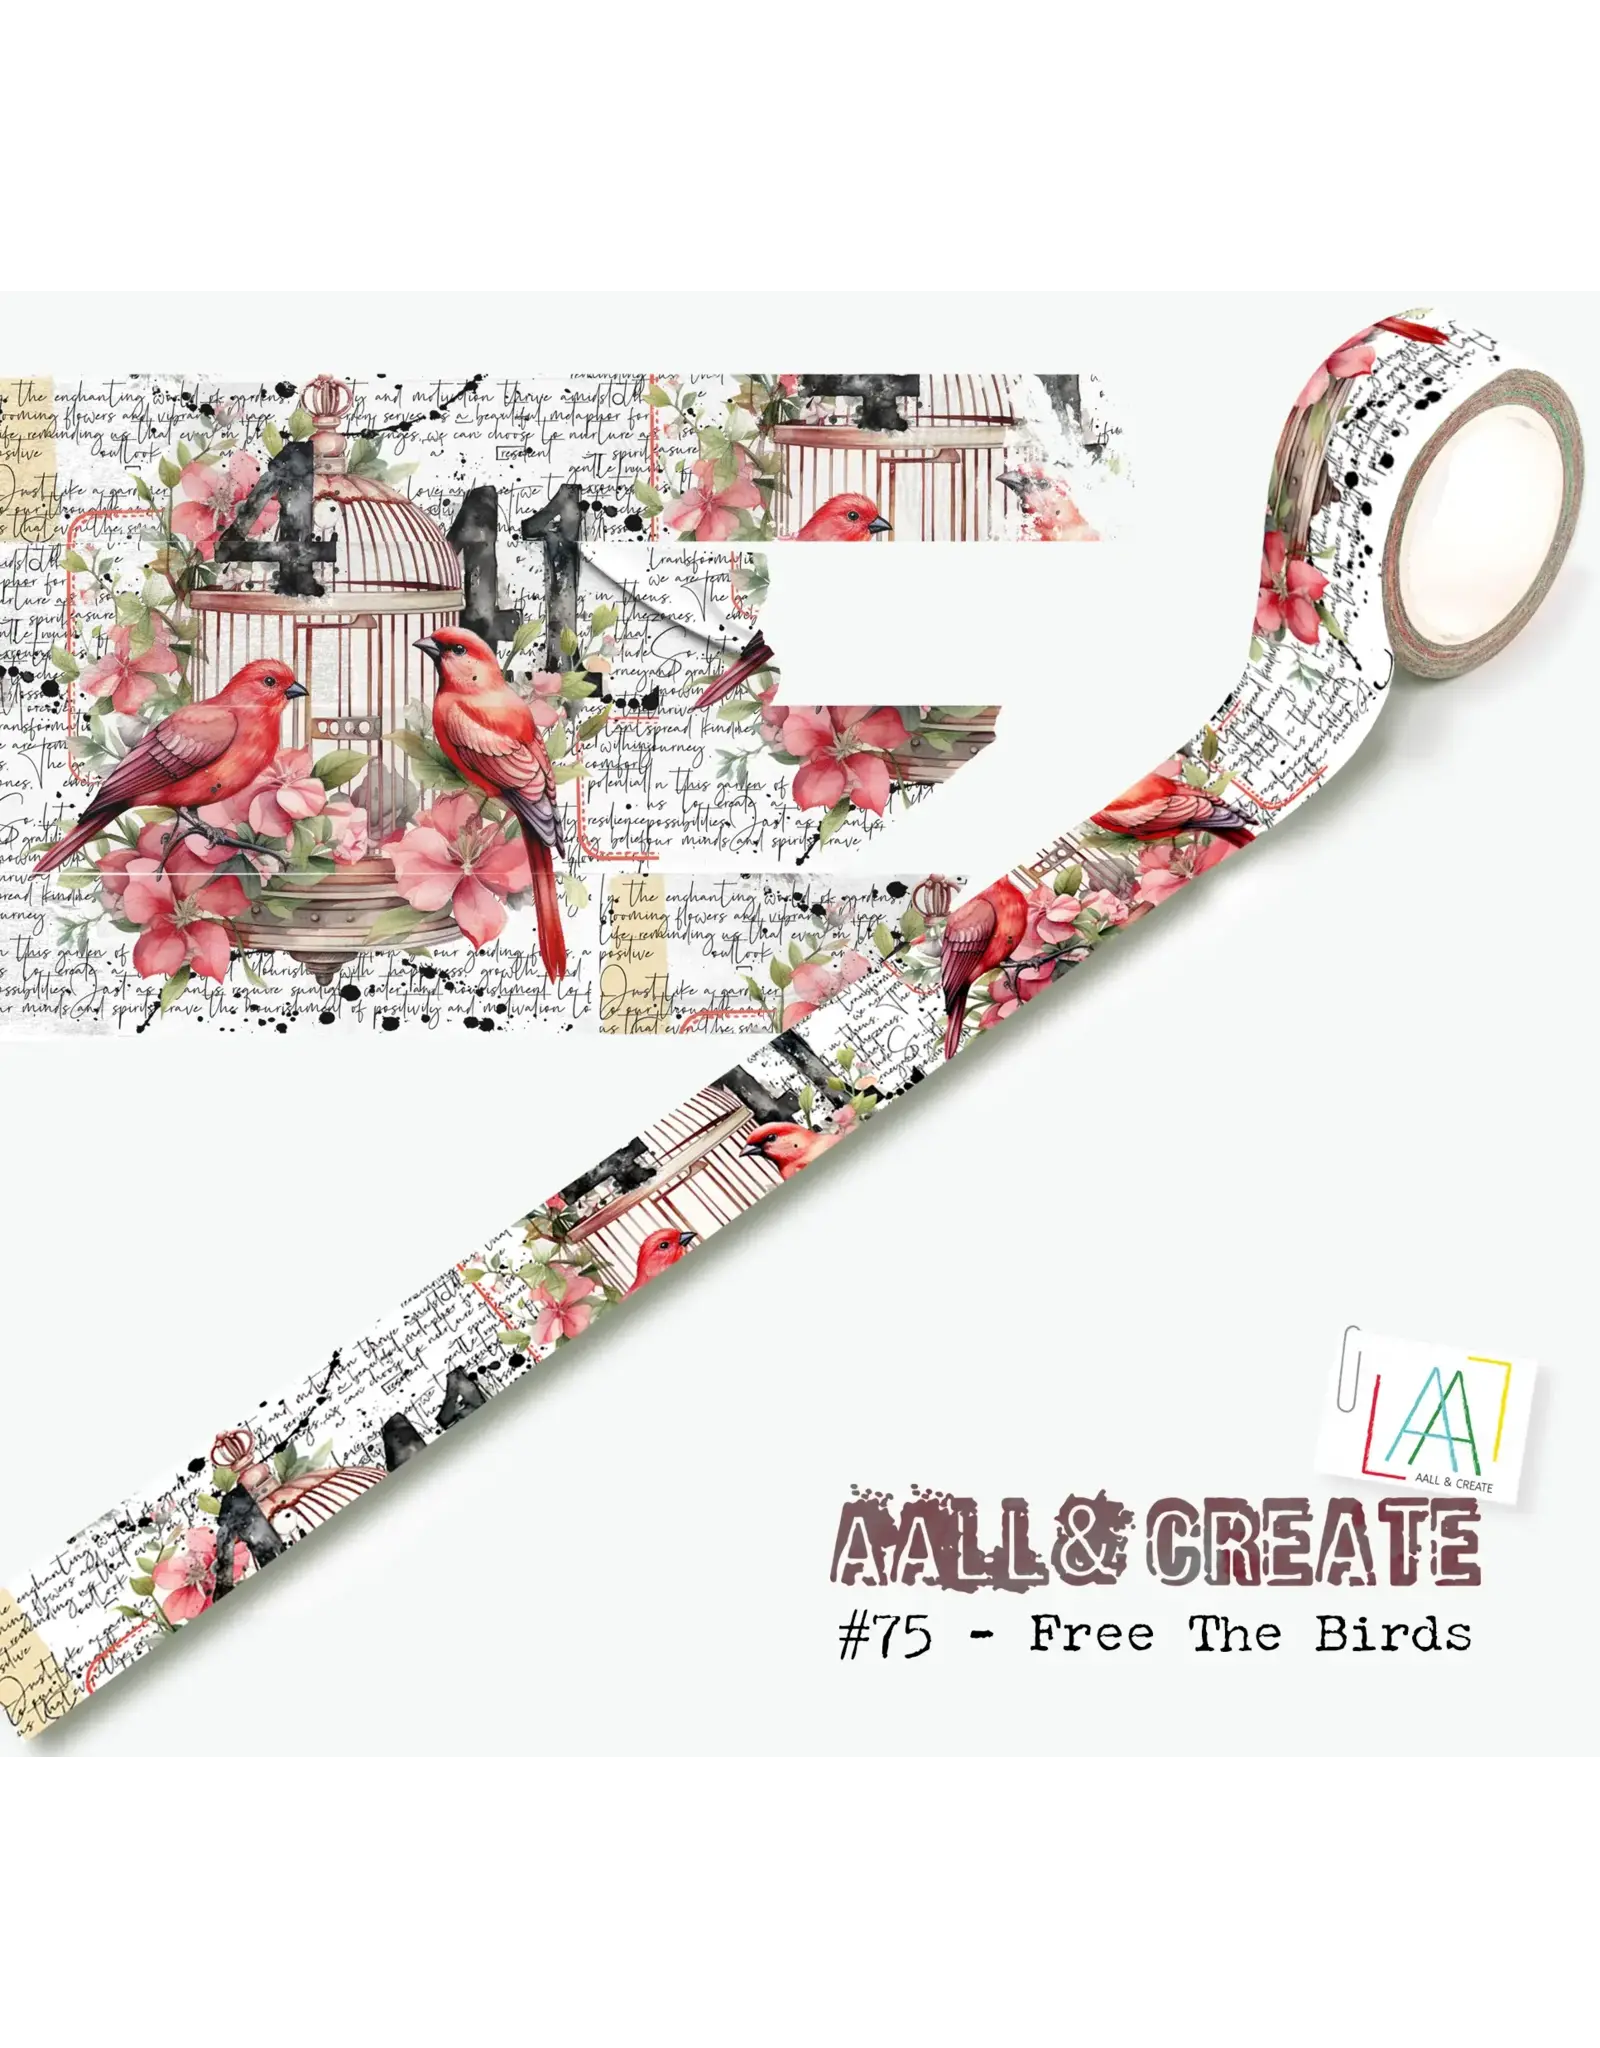 AALL & CREATE AALL & CREATE BIPASHA BK #75 FREE THE BIRDS WASHI TAPE